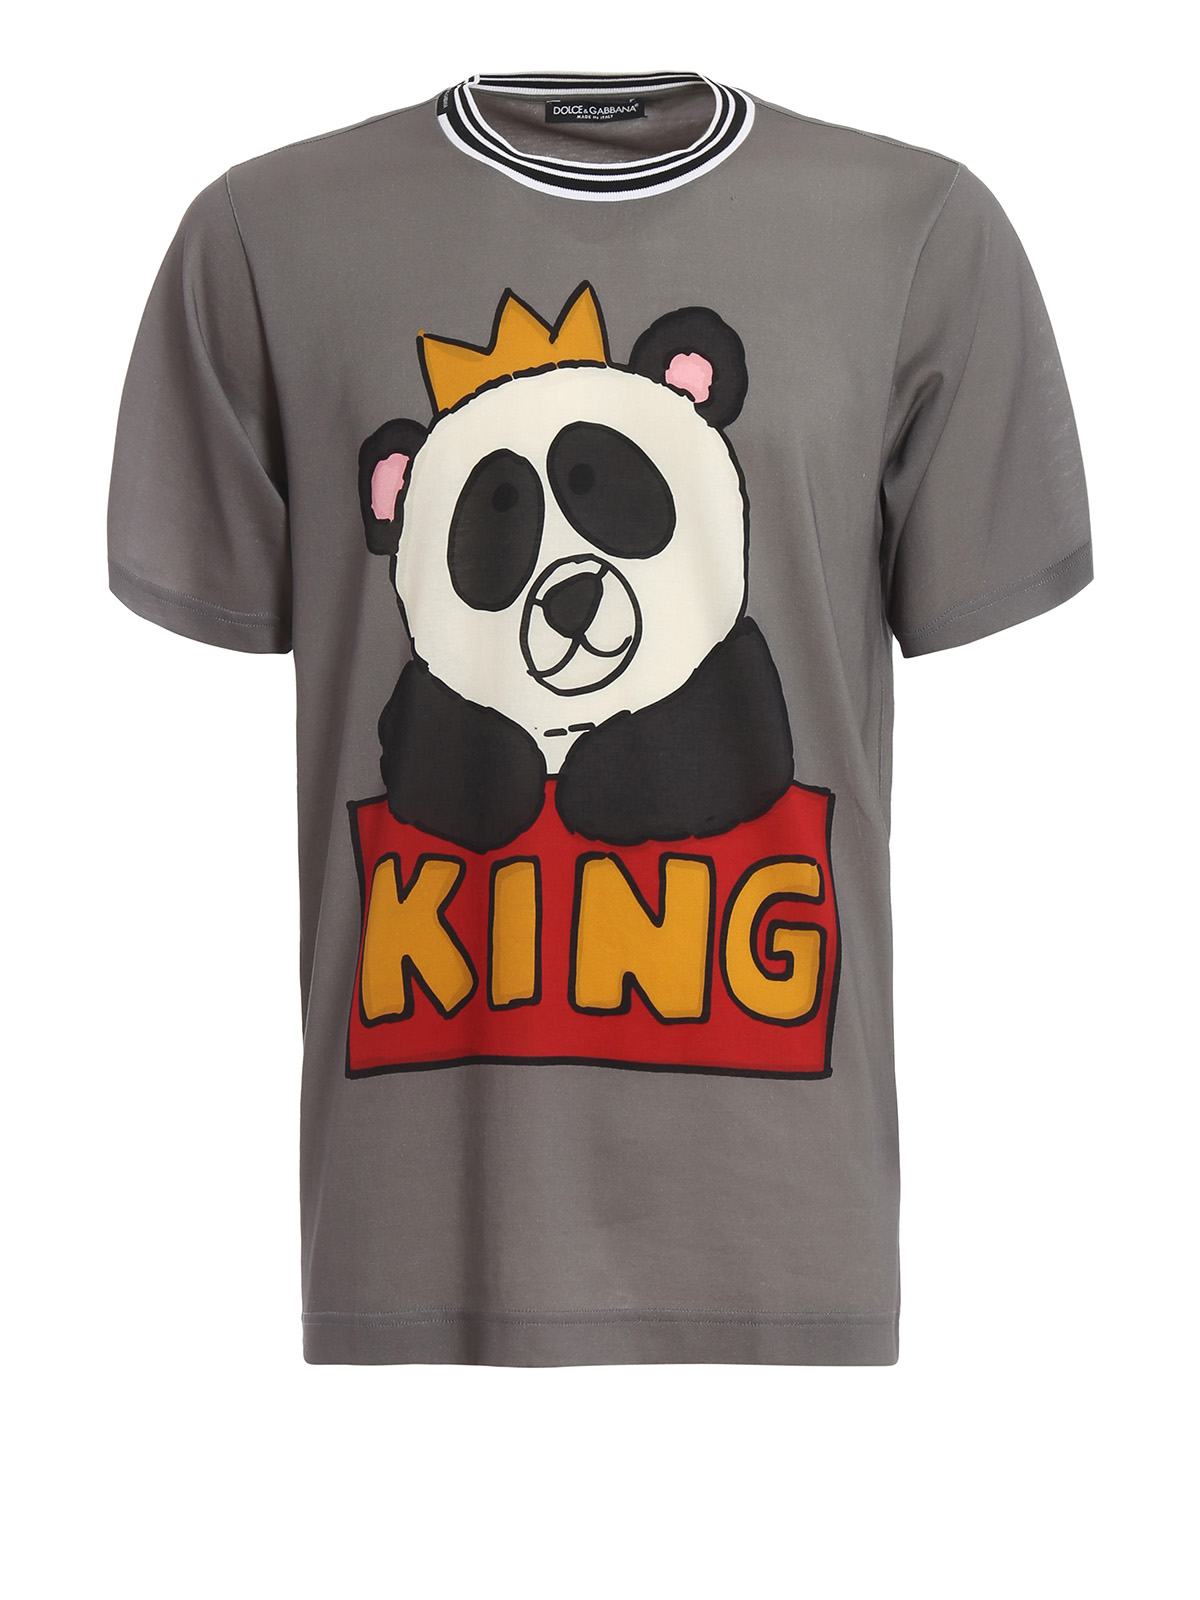 replica embrace mistaken T-shirts Dolce & Gabbana - Panda King cotton T-shirt - G8HV4THH7HUHJX25